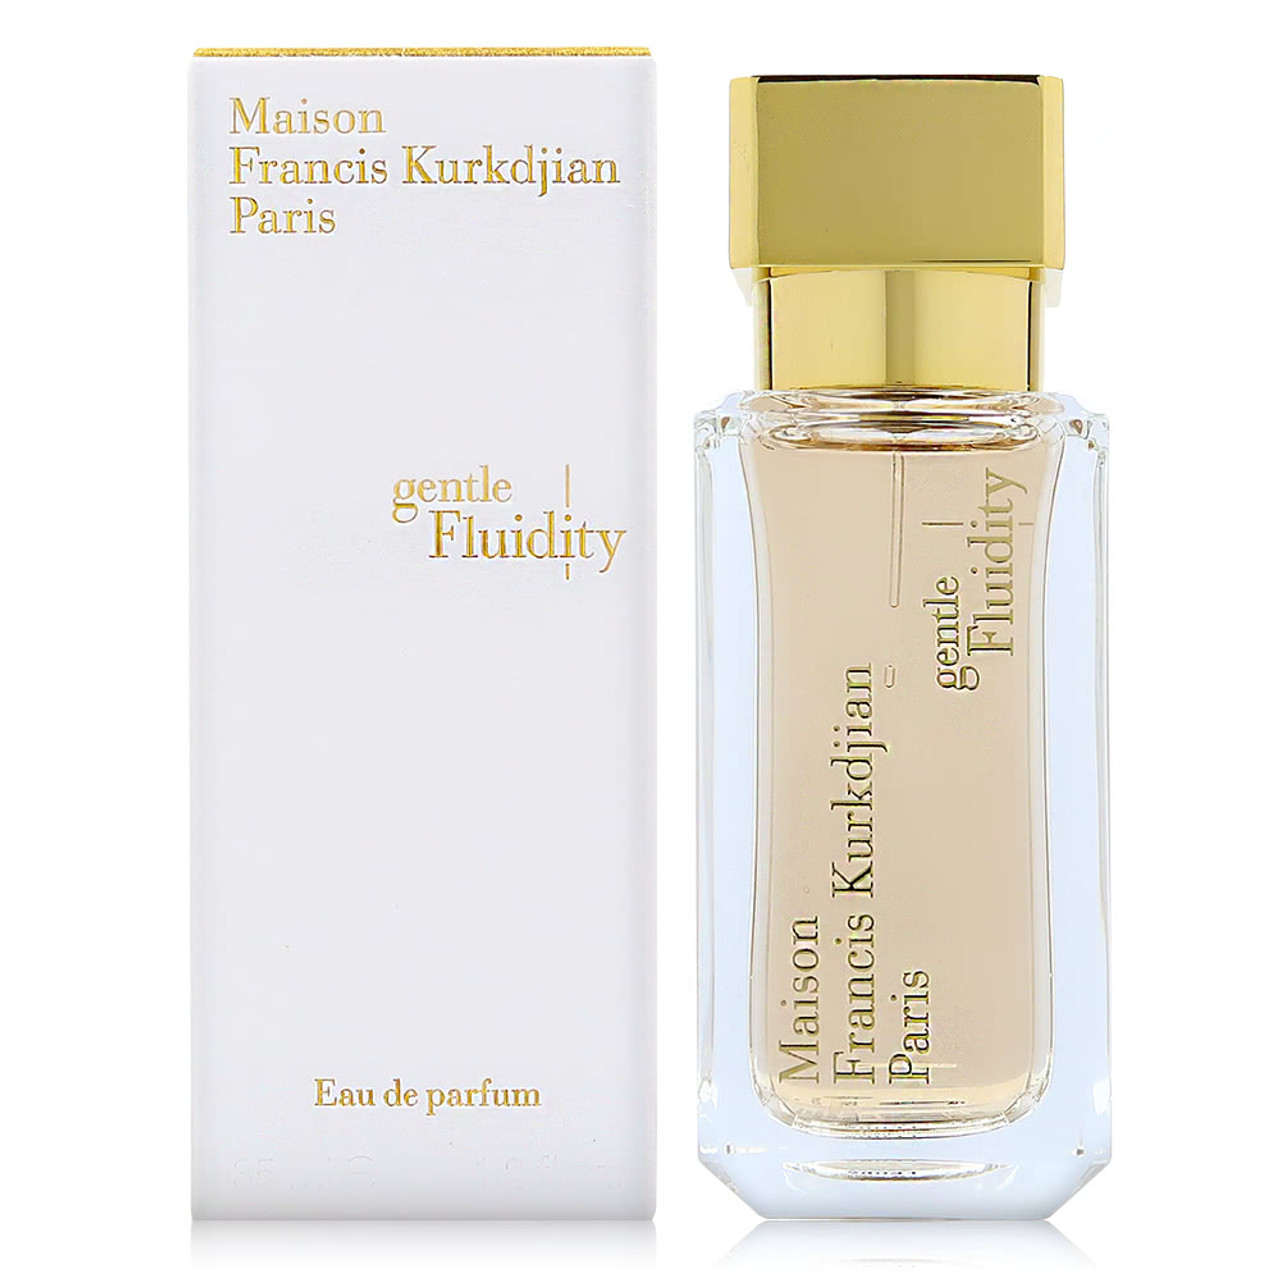 Maison Francis Kurkdjian Gentle Fluidity Gold 35 ml